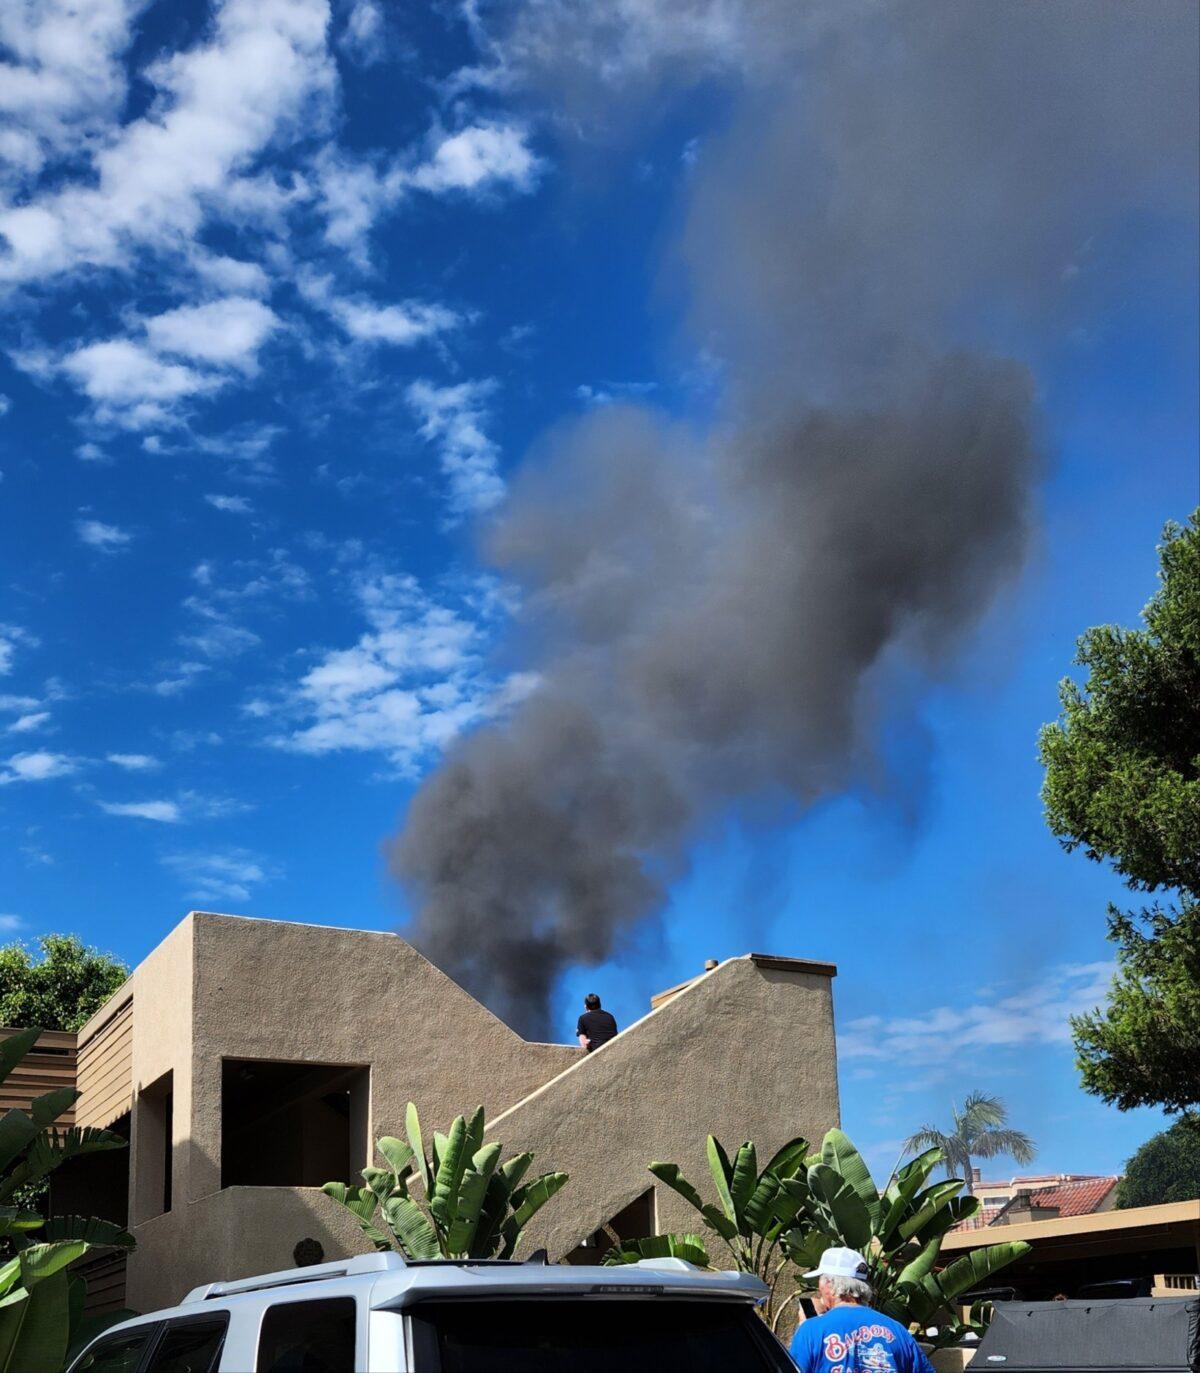 An apartment fire burns in Newport Beach, Calif., on Sept. 11, 2022. (Courtesy of Elizabeth Barden)